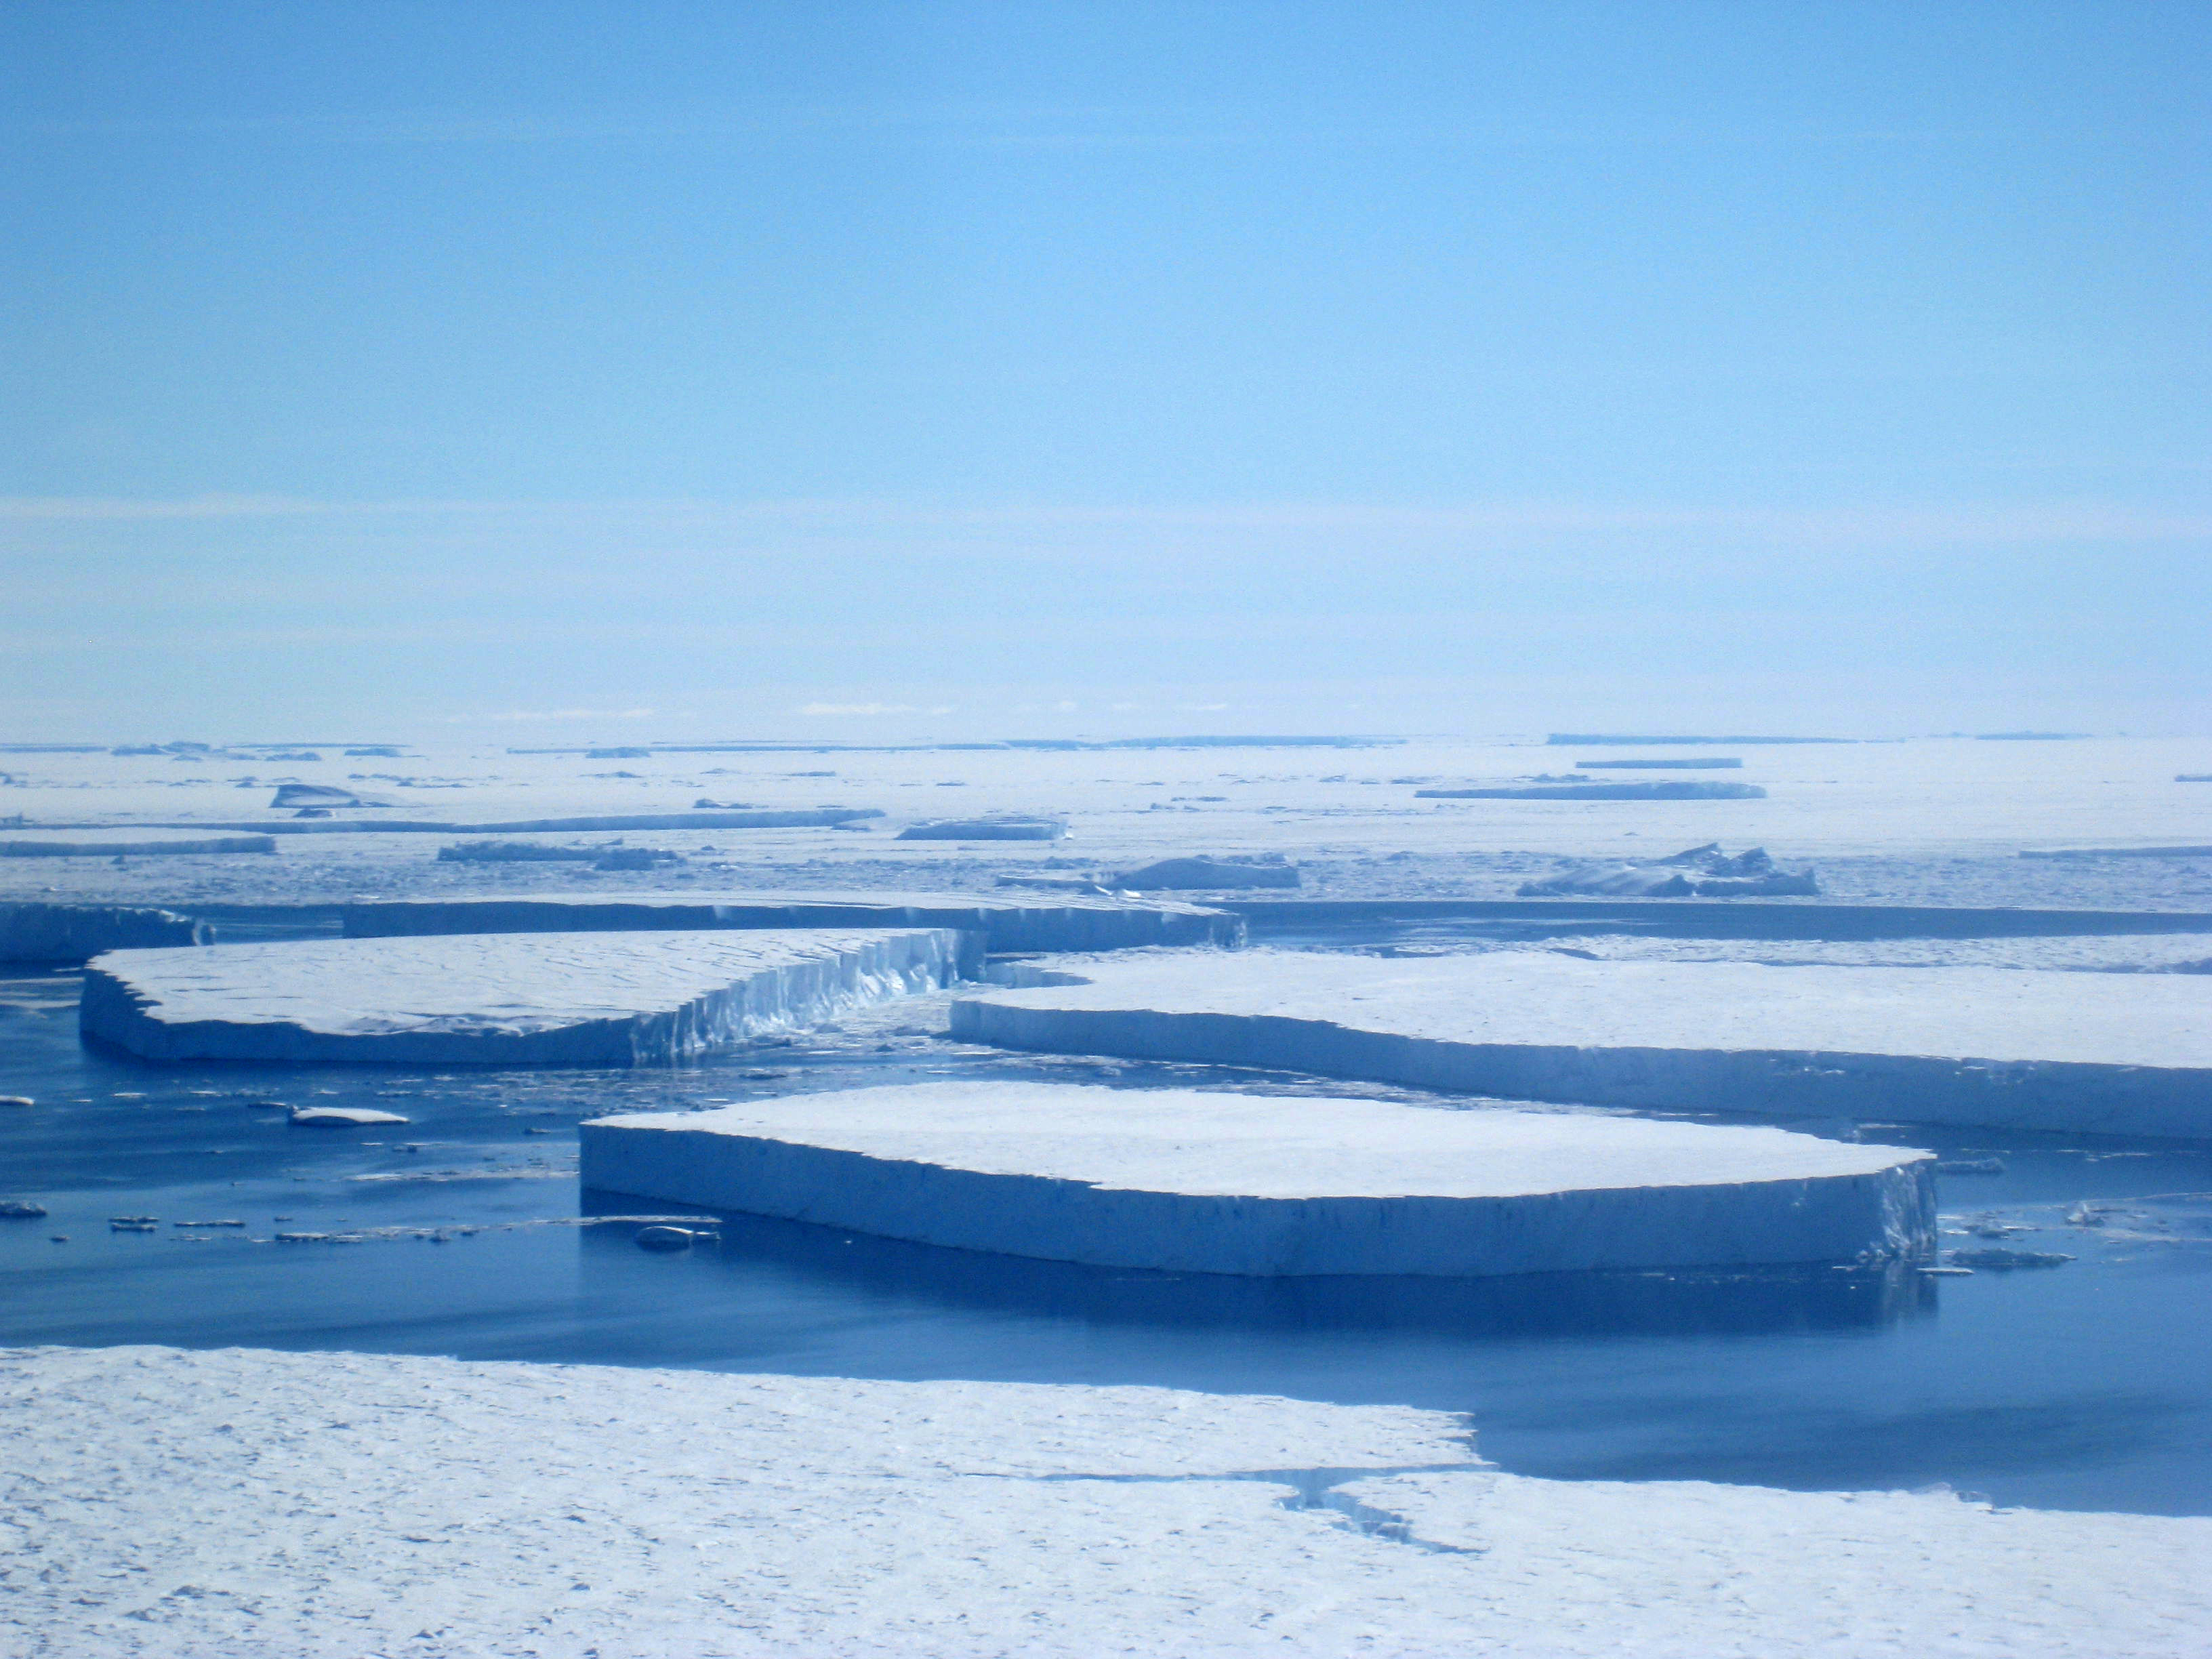 Icebergs float in the ocean.